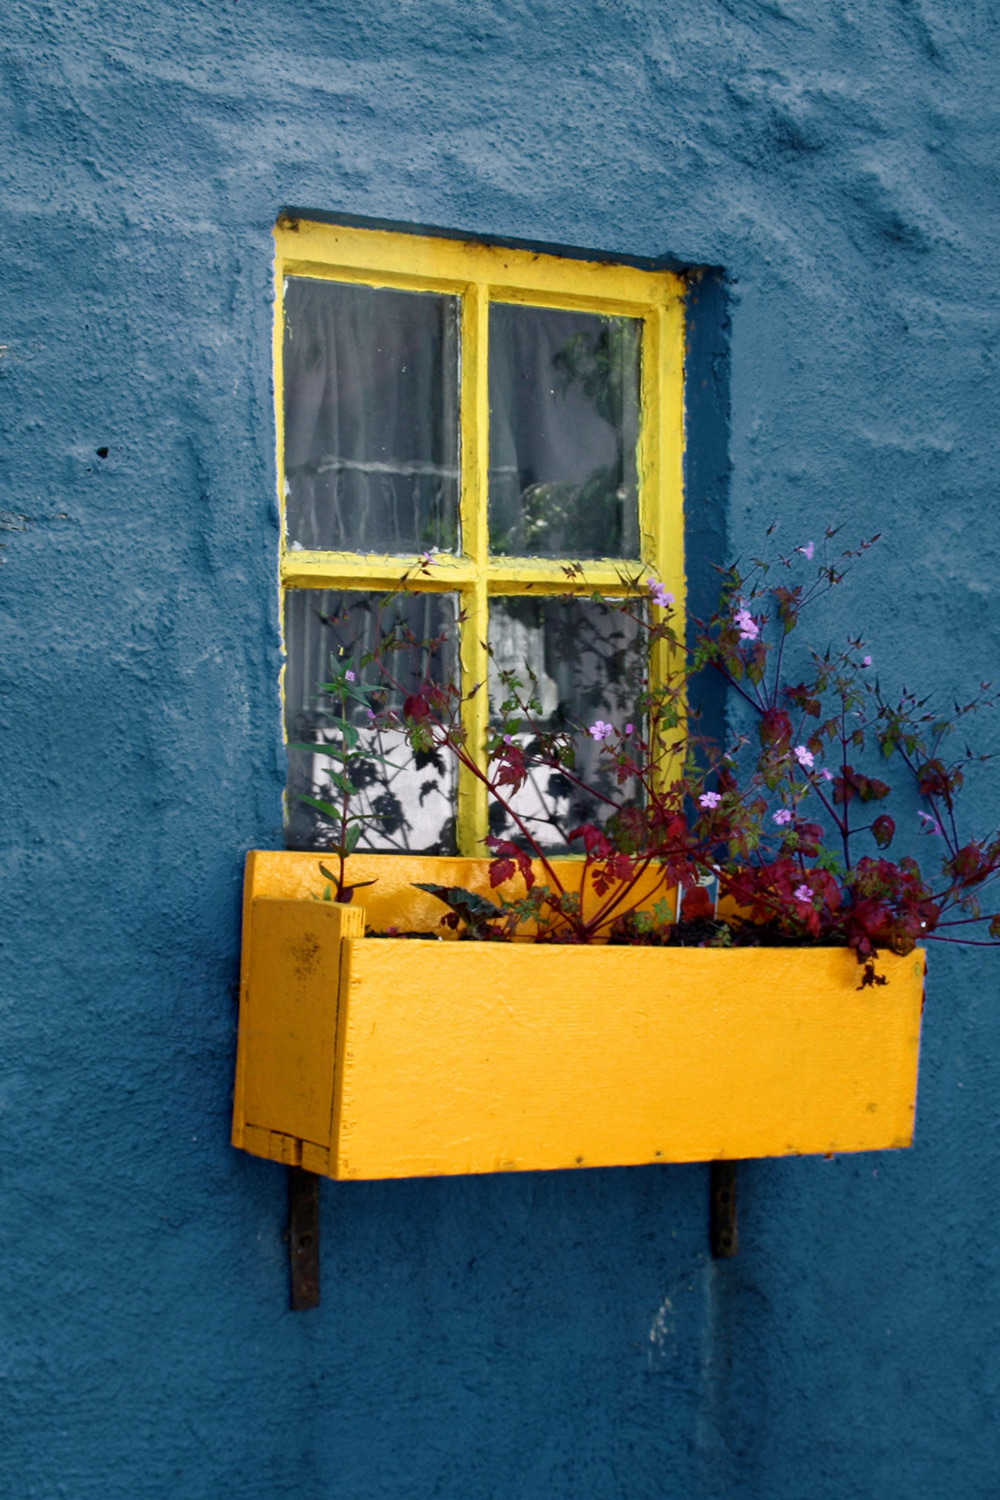 ventana amarilla sobre una pared azul